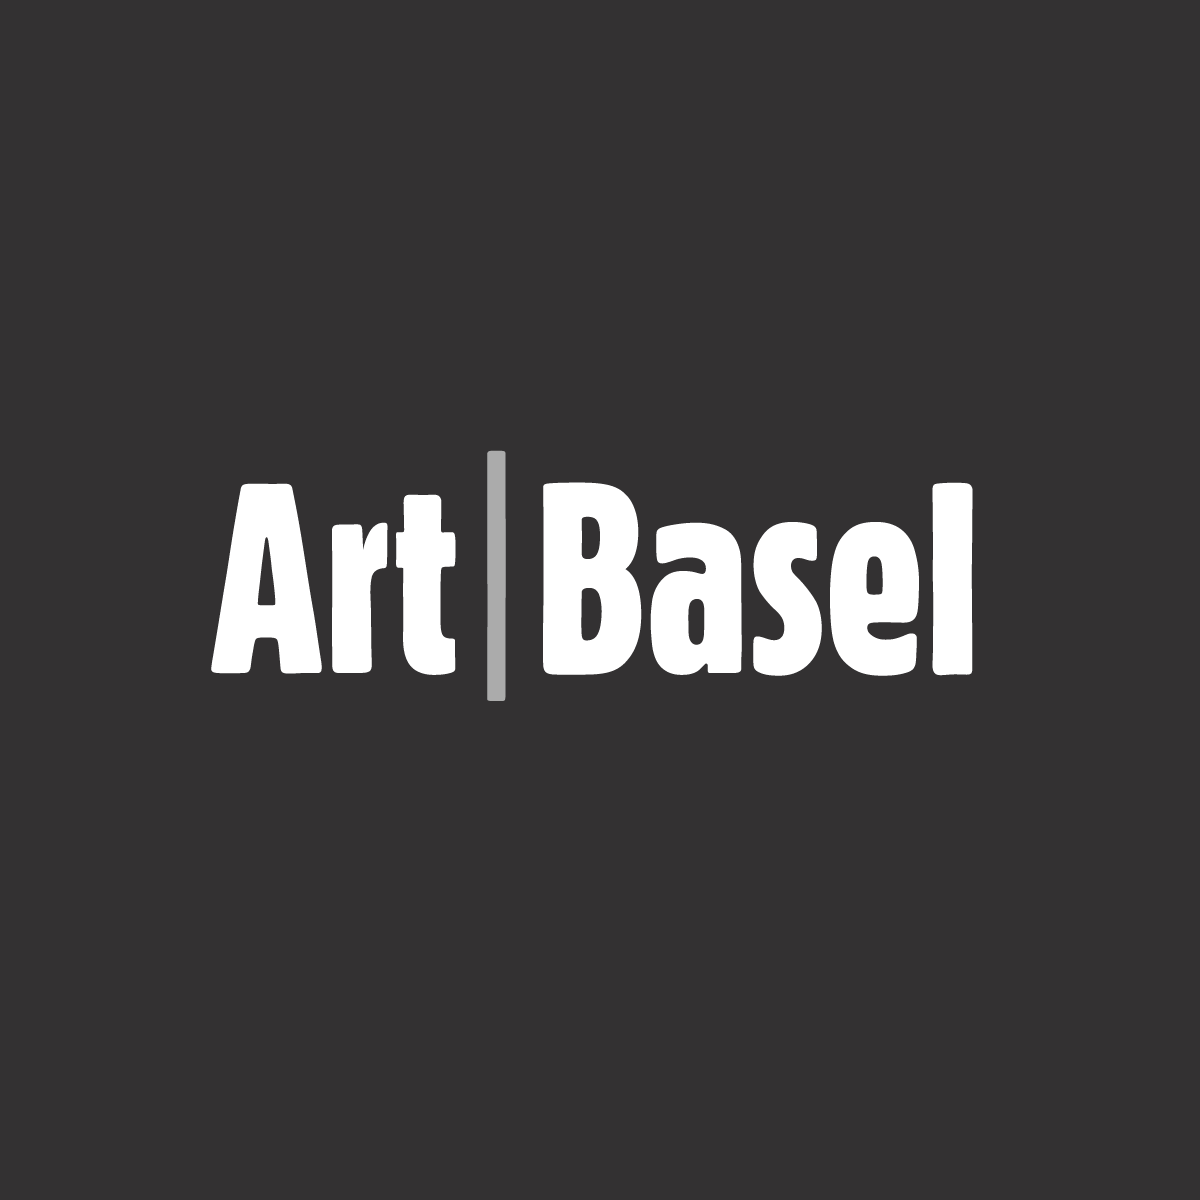 Besuch ART BASEL Satelliten-Expos